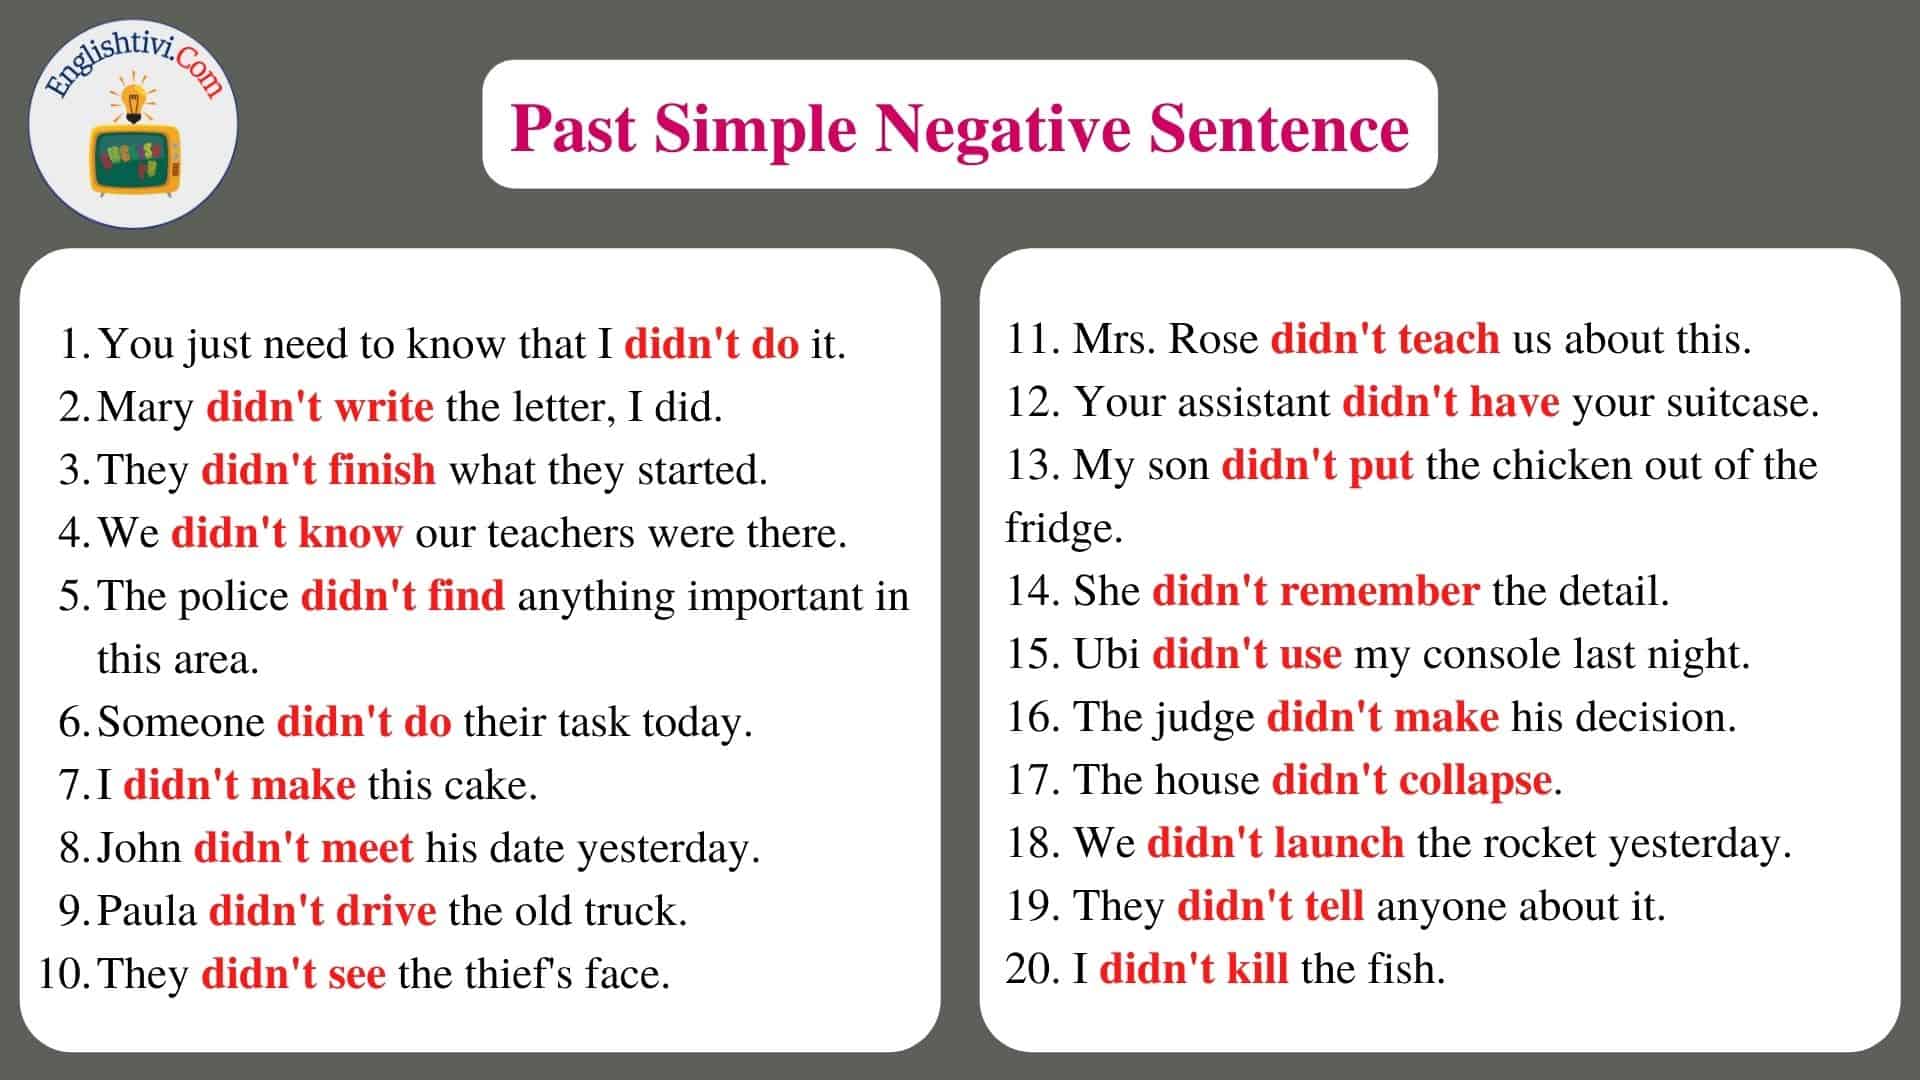 Past_Simple_Negative_Sentence